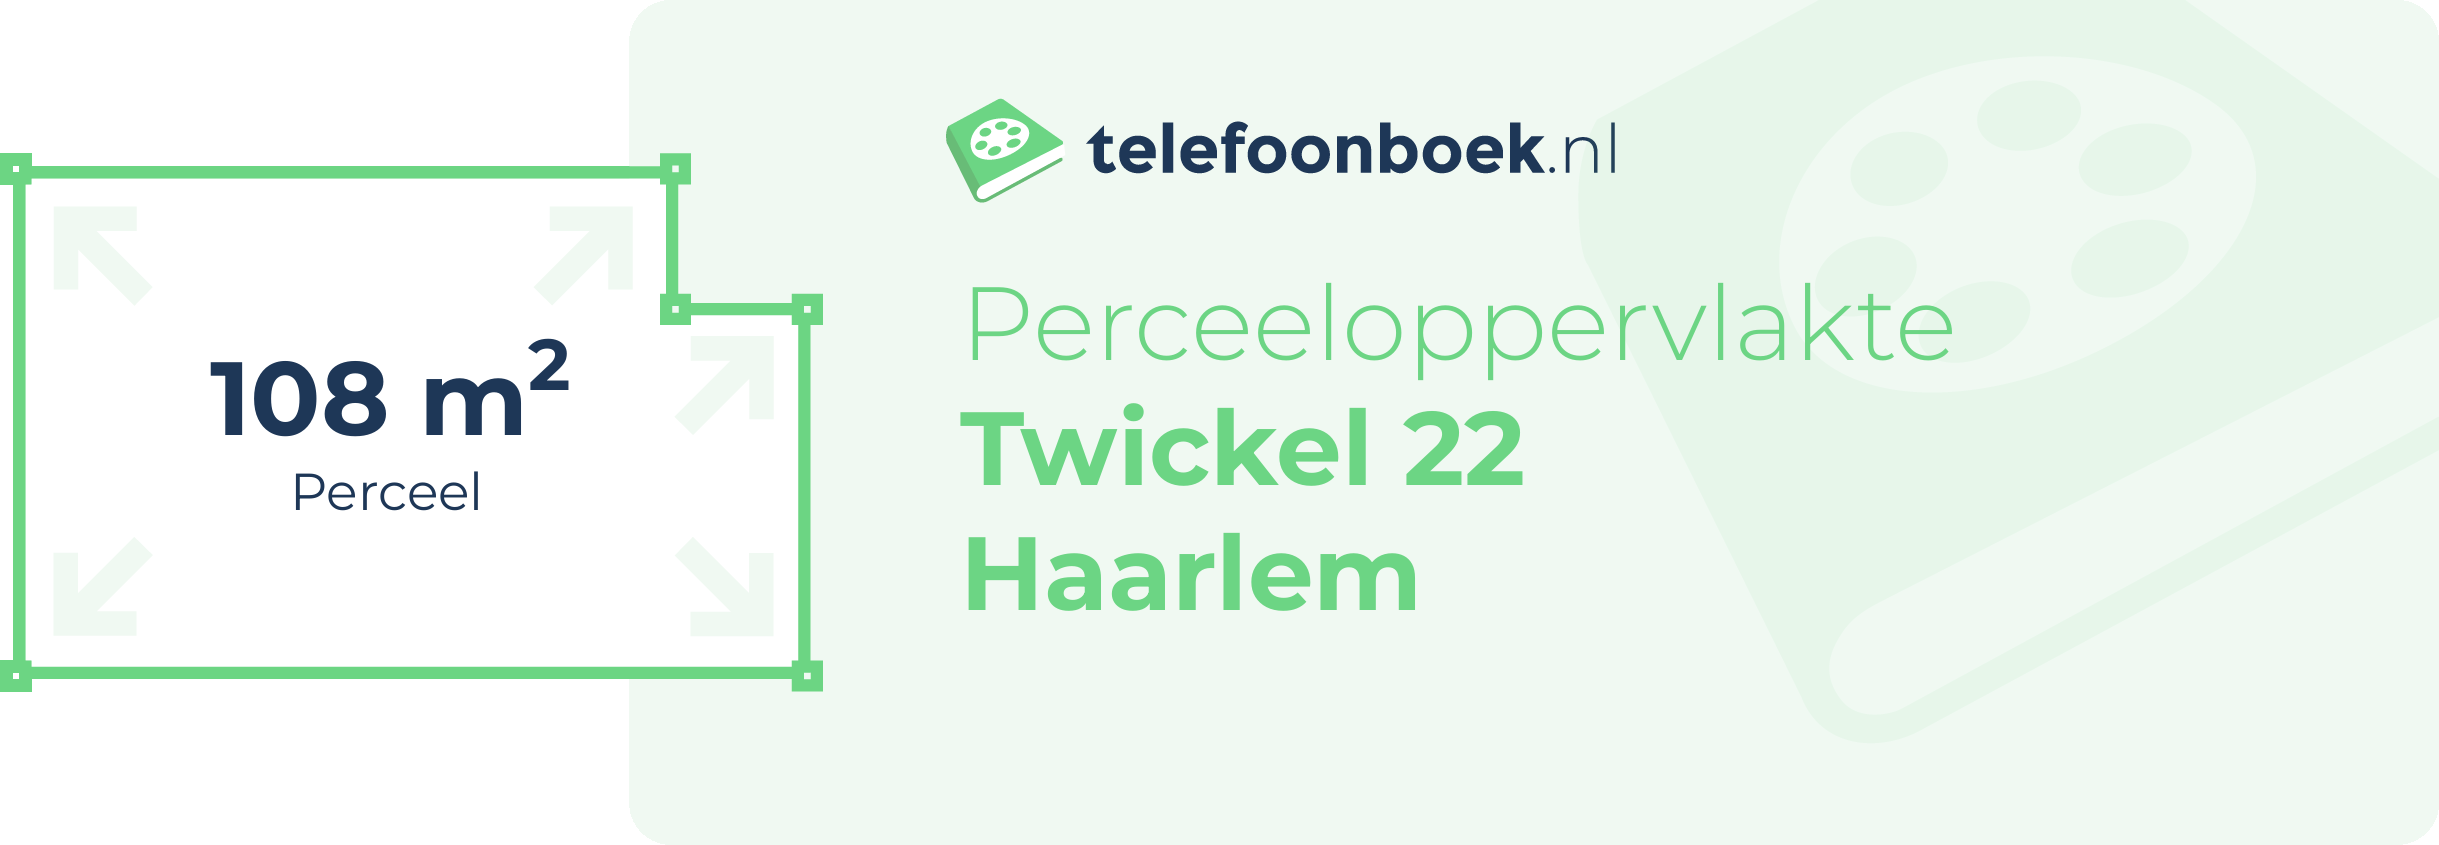 Perceeloppervlakte Twickel 22 Haarlem